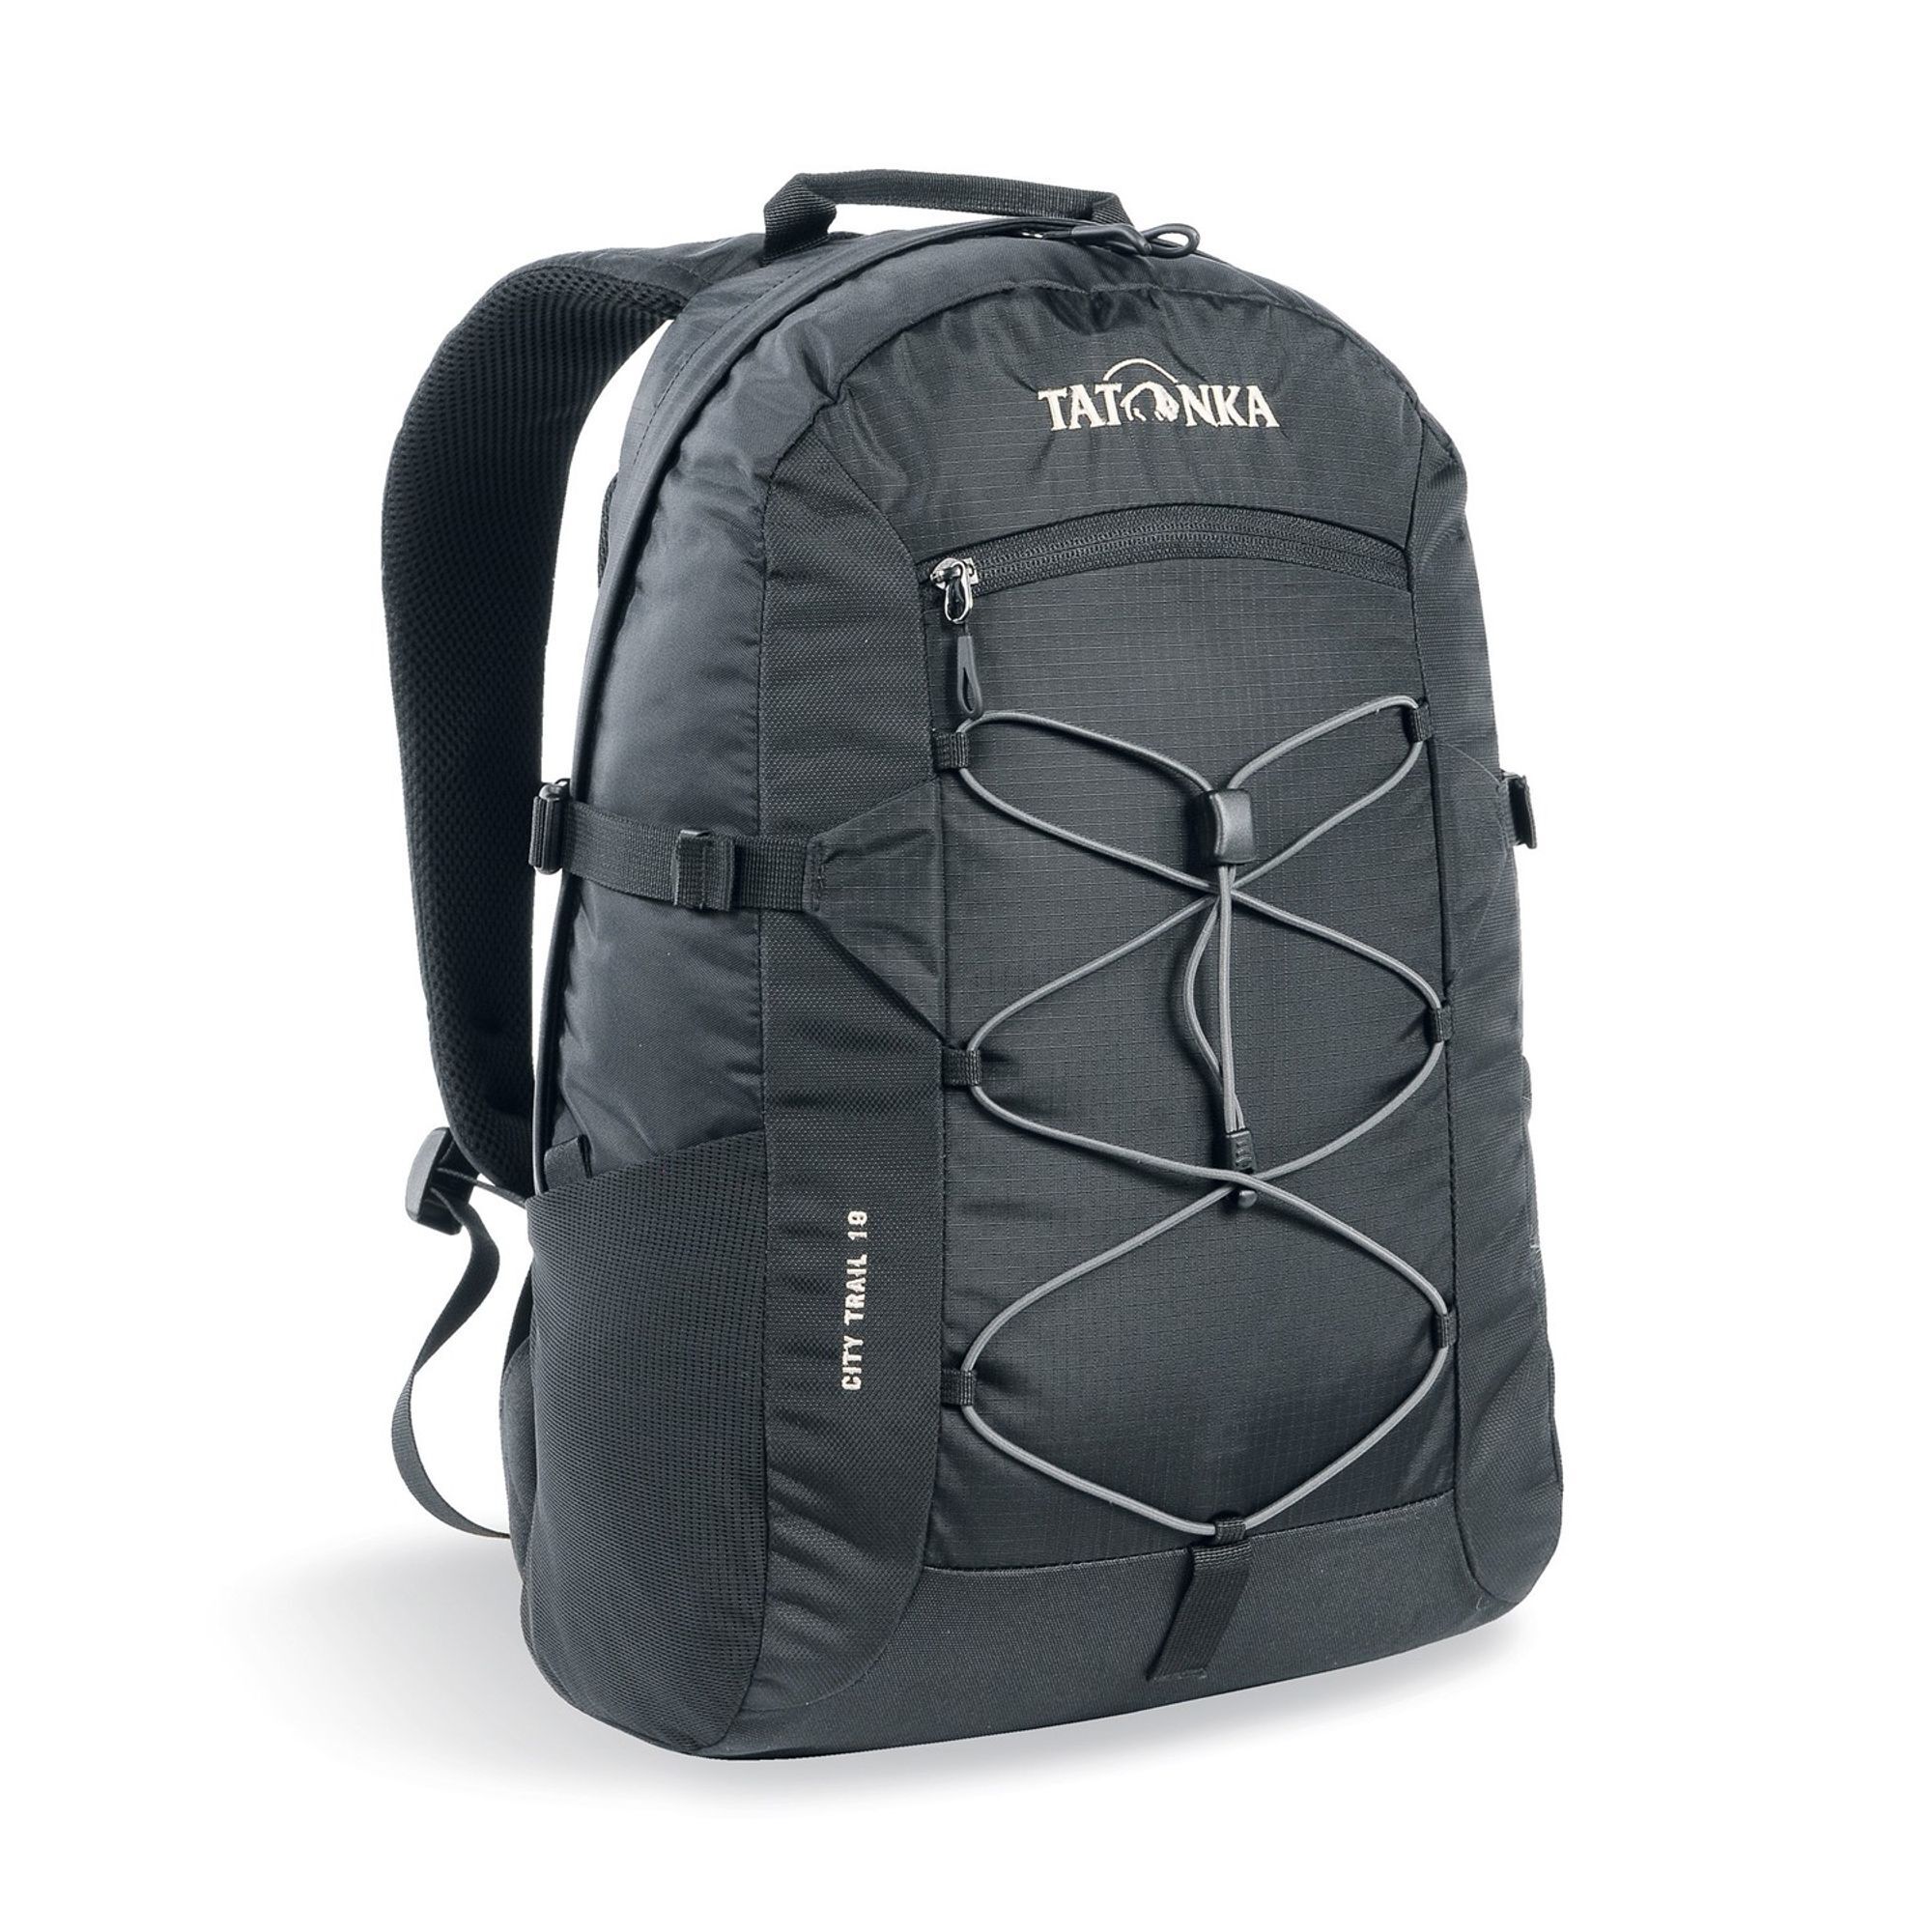 Рюкзак Tatonka City Trail 19 43 cm Laptopfach, черный рюкзак tatonka city rolltop 50 cm laptopfach черный